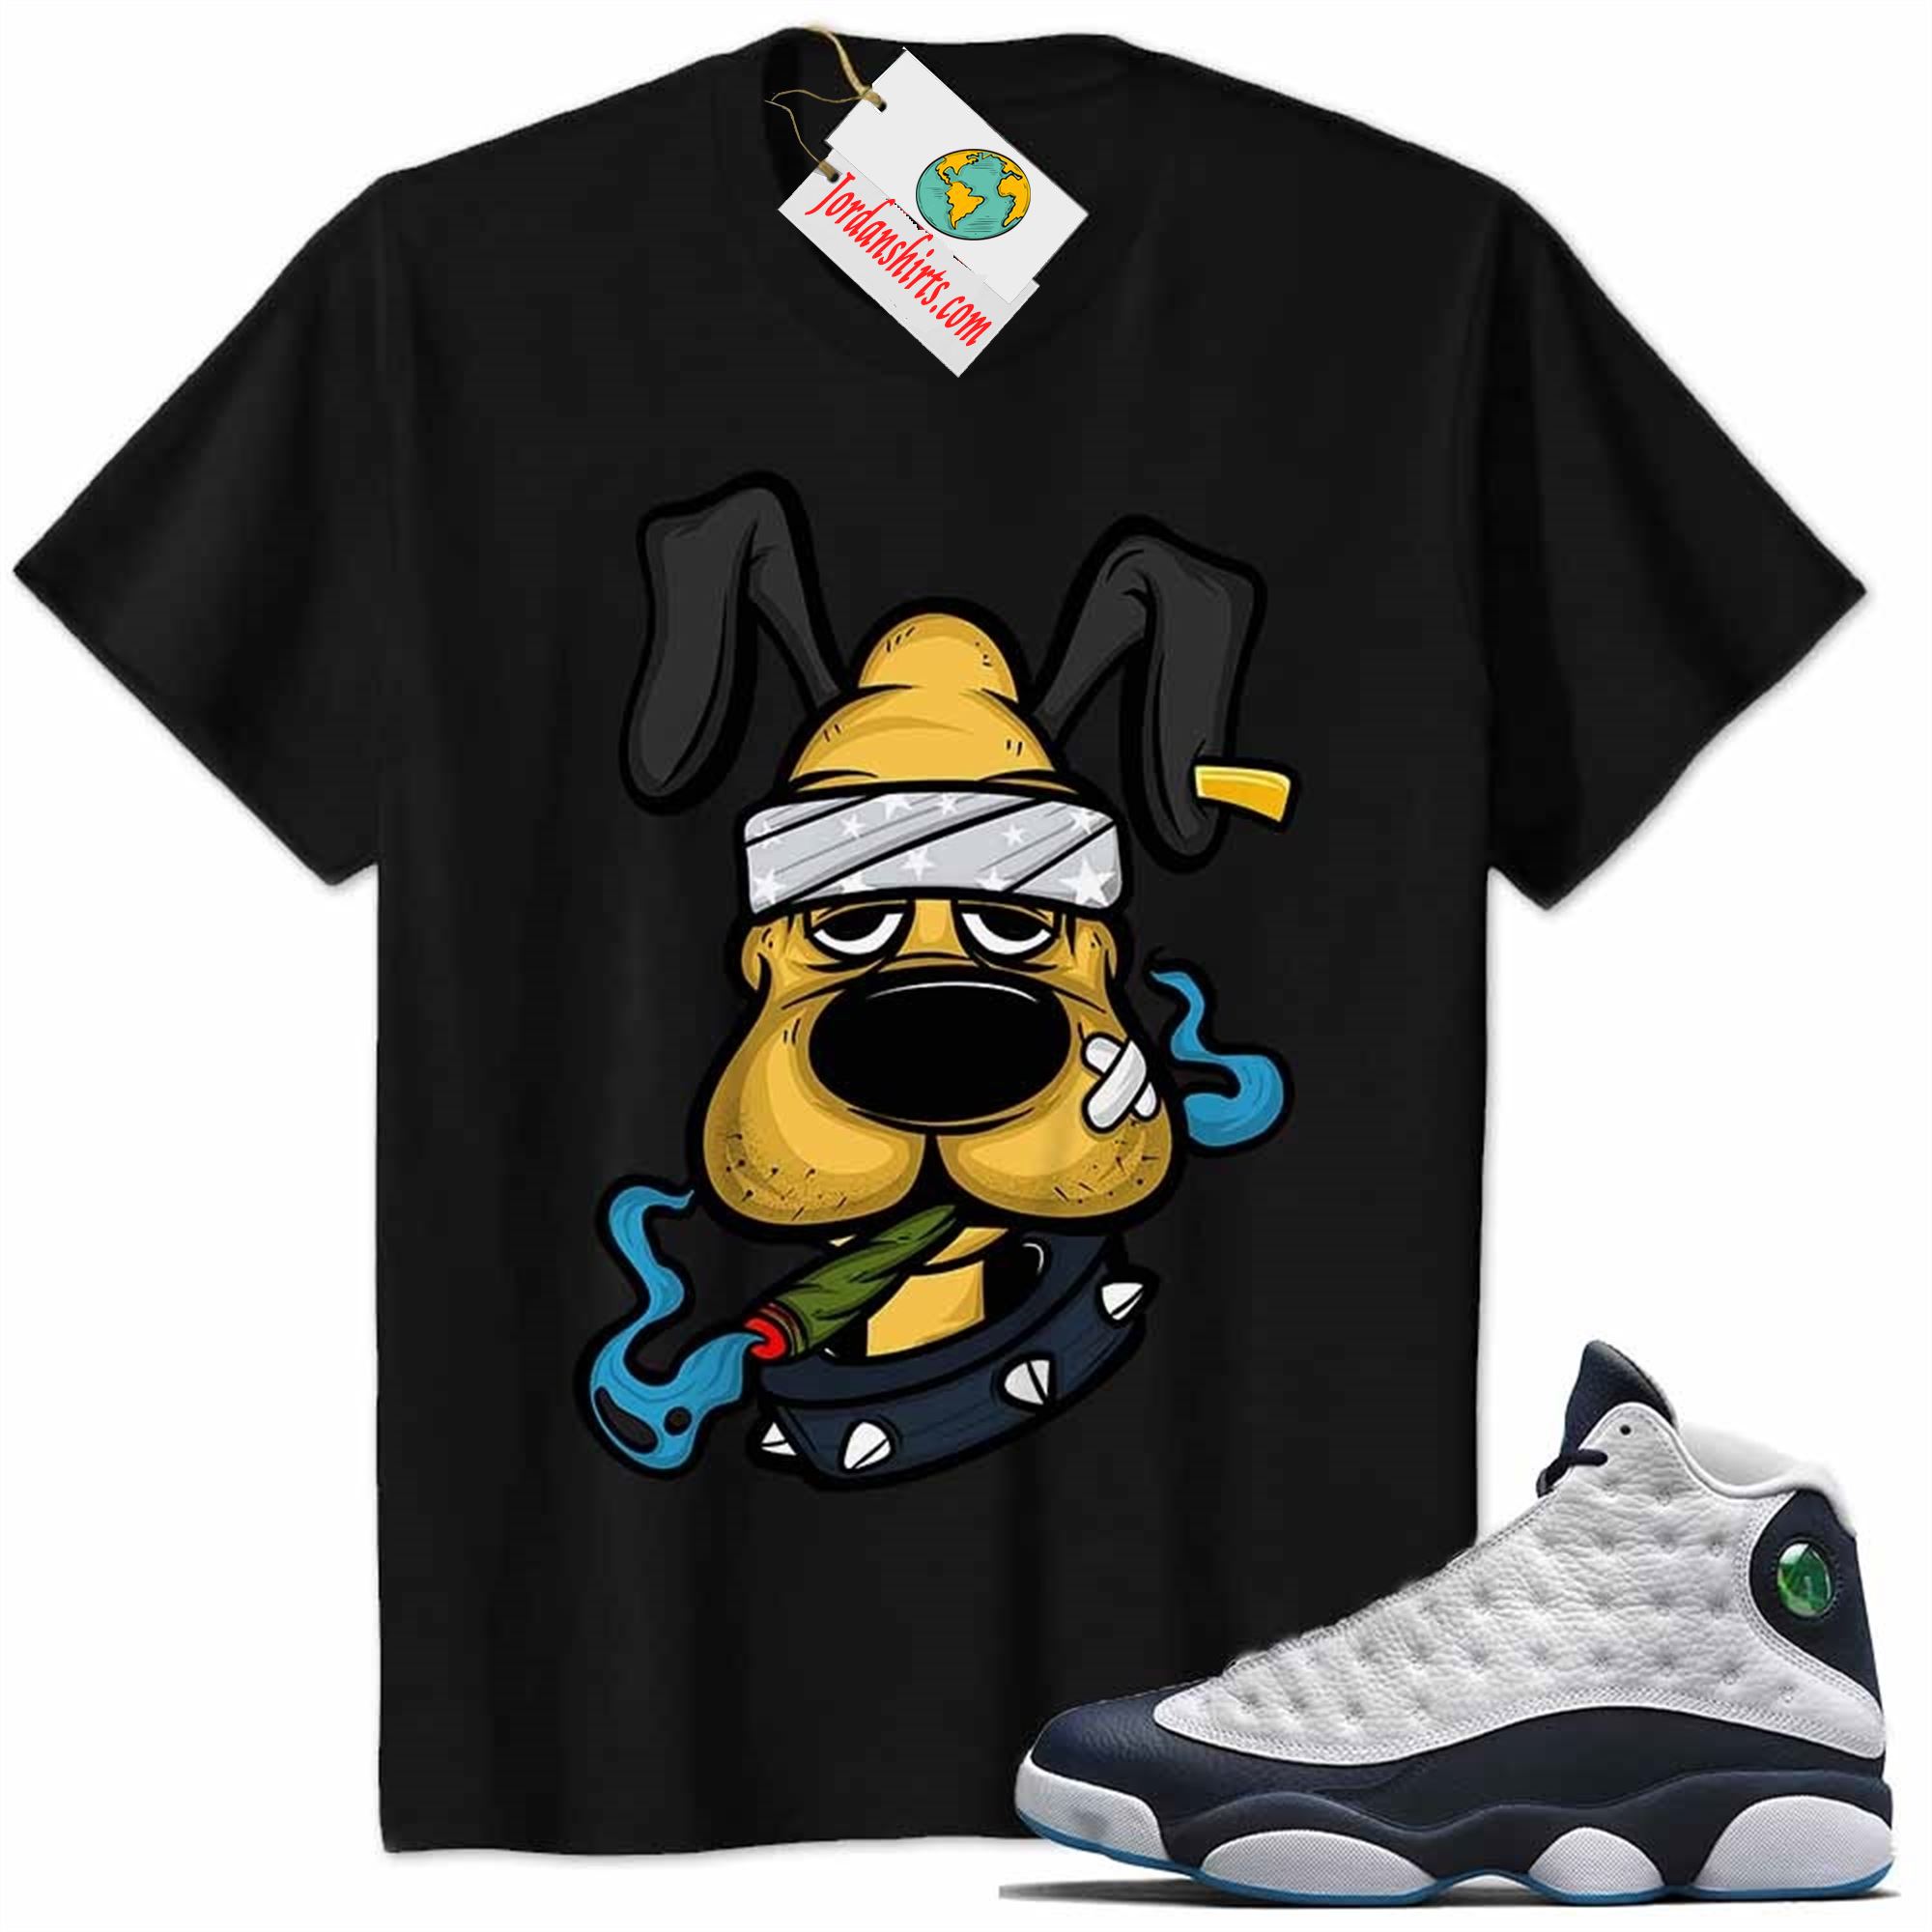 Jordan 13 Shirt, Gangster Pluto Smoke Weed Black Air Jordan 13 Obsidian 13s Plus Size Up To 5xl